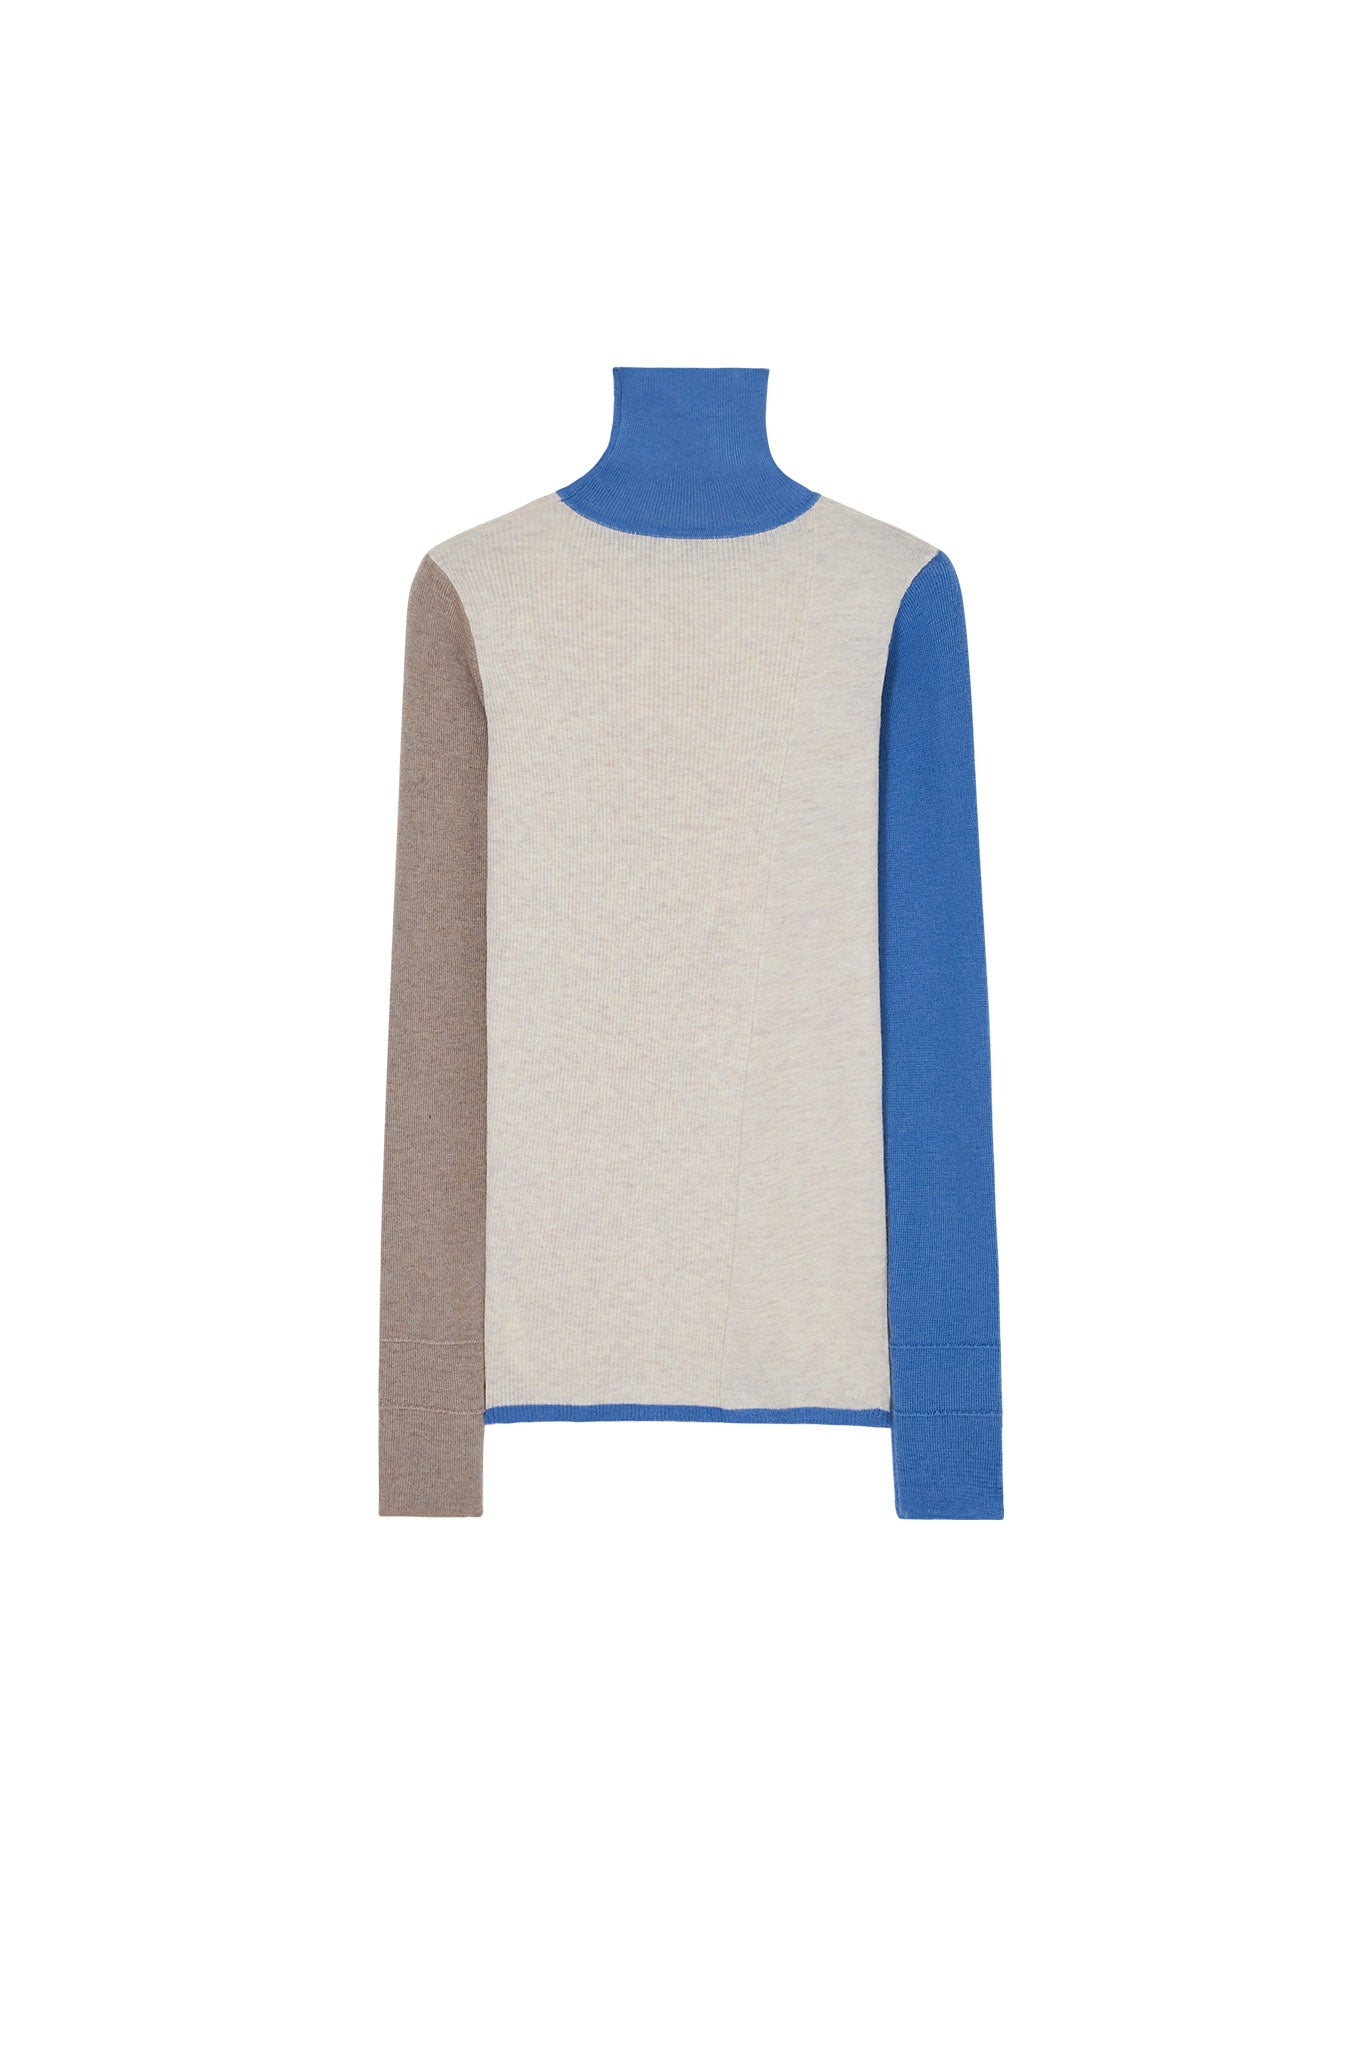 [tageechita] Bicolor high neck wool knit tops